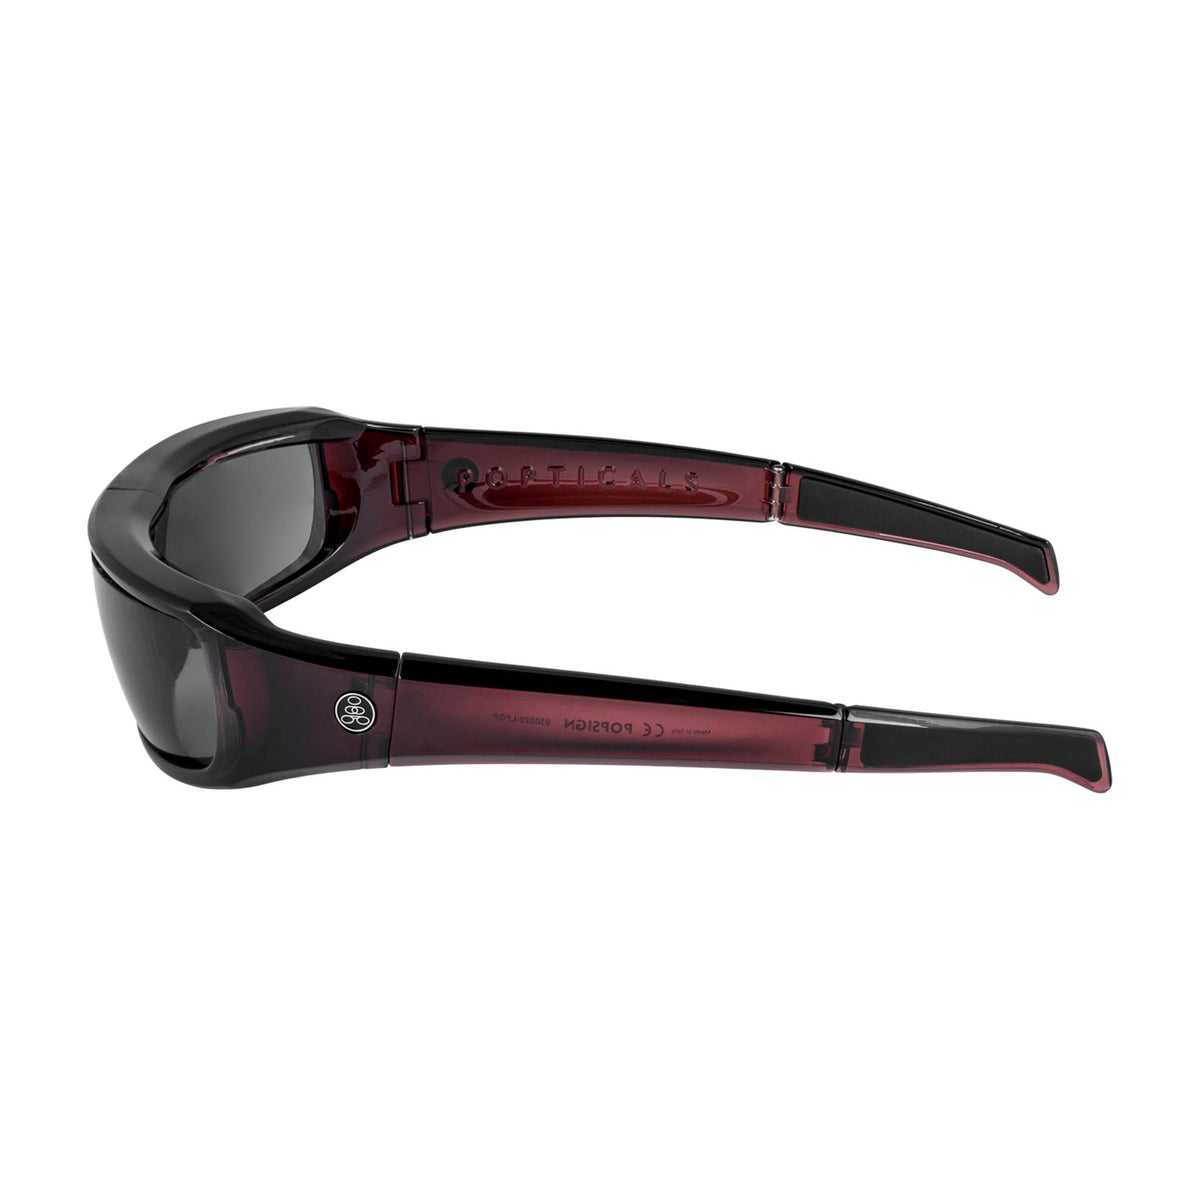 Popticals, Premium Compact Sunglasses, PopSign, 030020-LFGP, Polarized Sunglasses, Gloss Wine/Black Crystal Frame, Gray Lenses, Side View